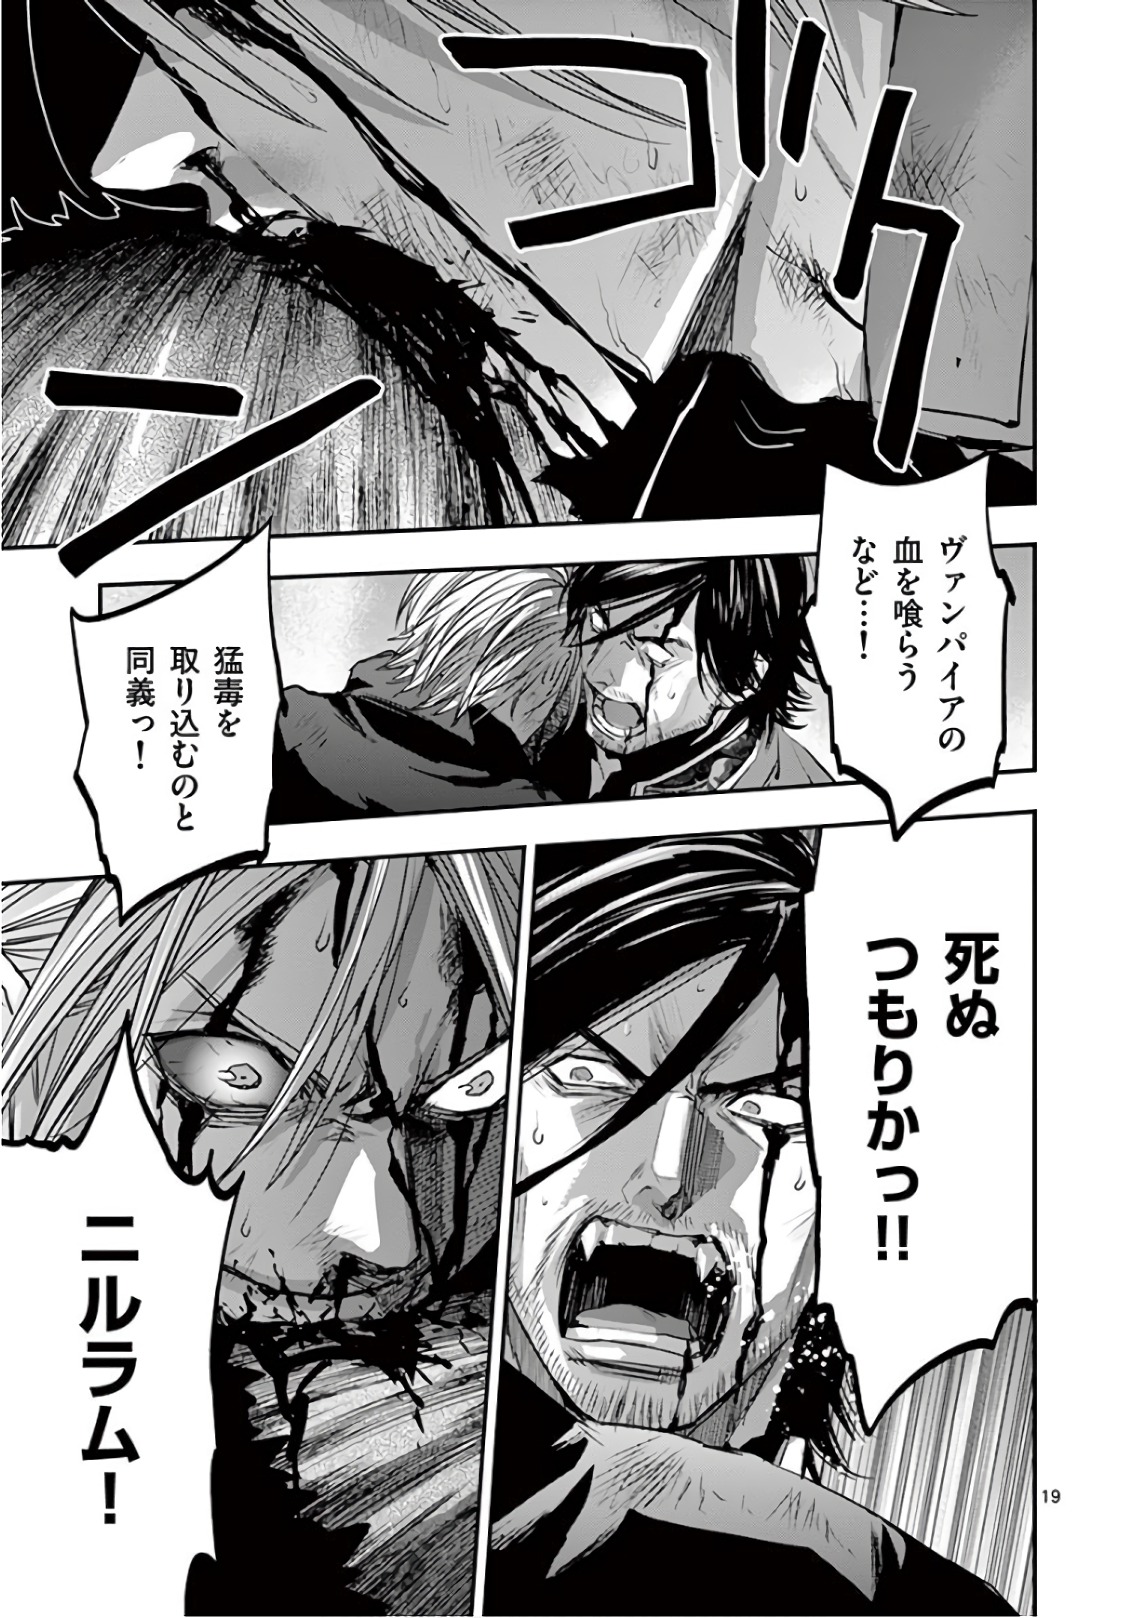 Ginrou Bloodborne - Chapter 84 - Page 19